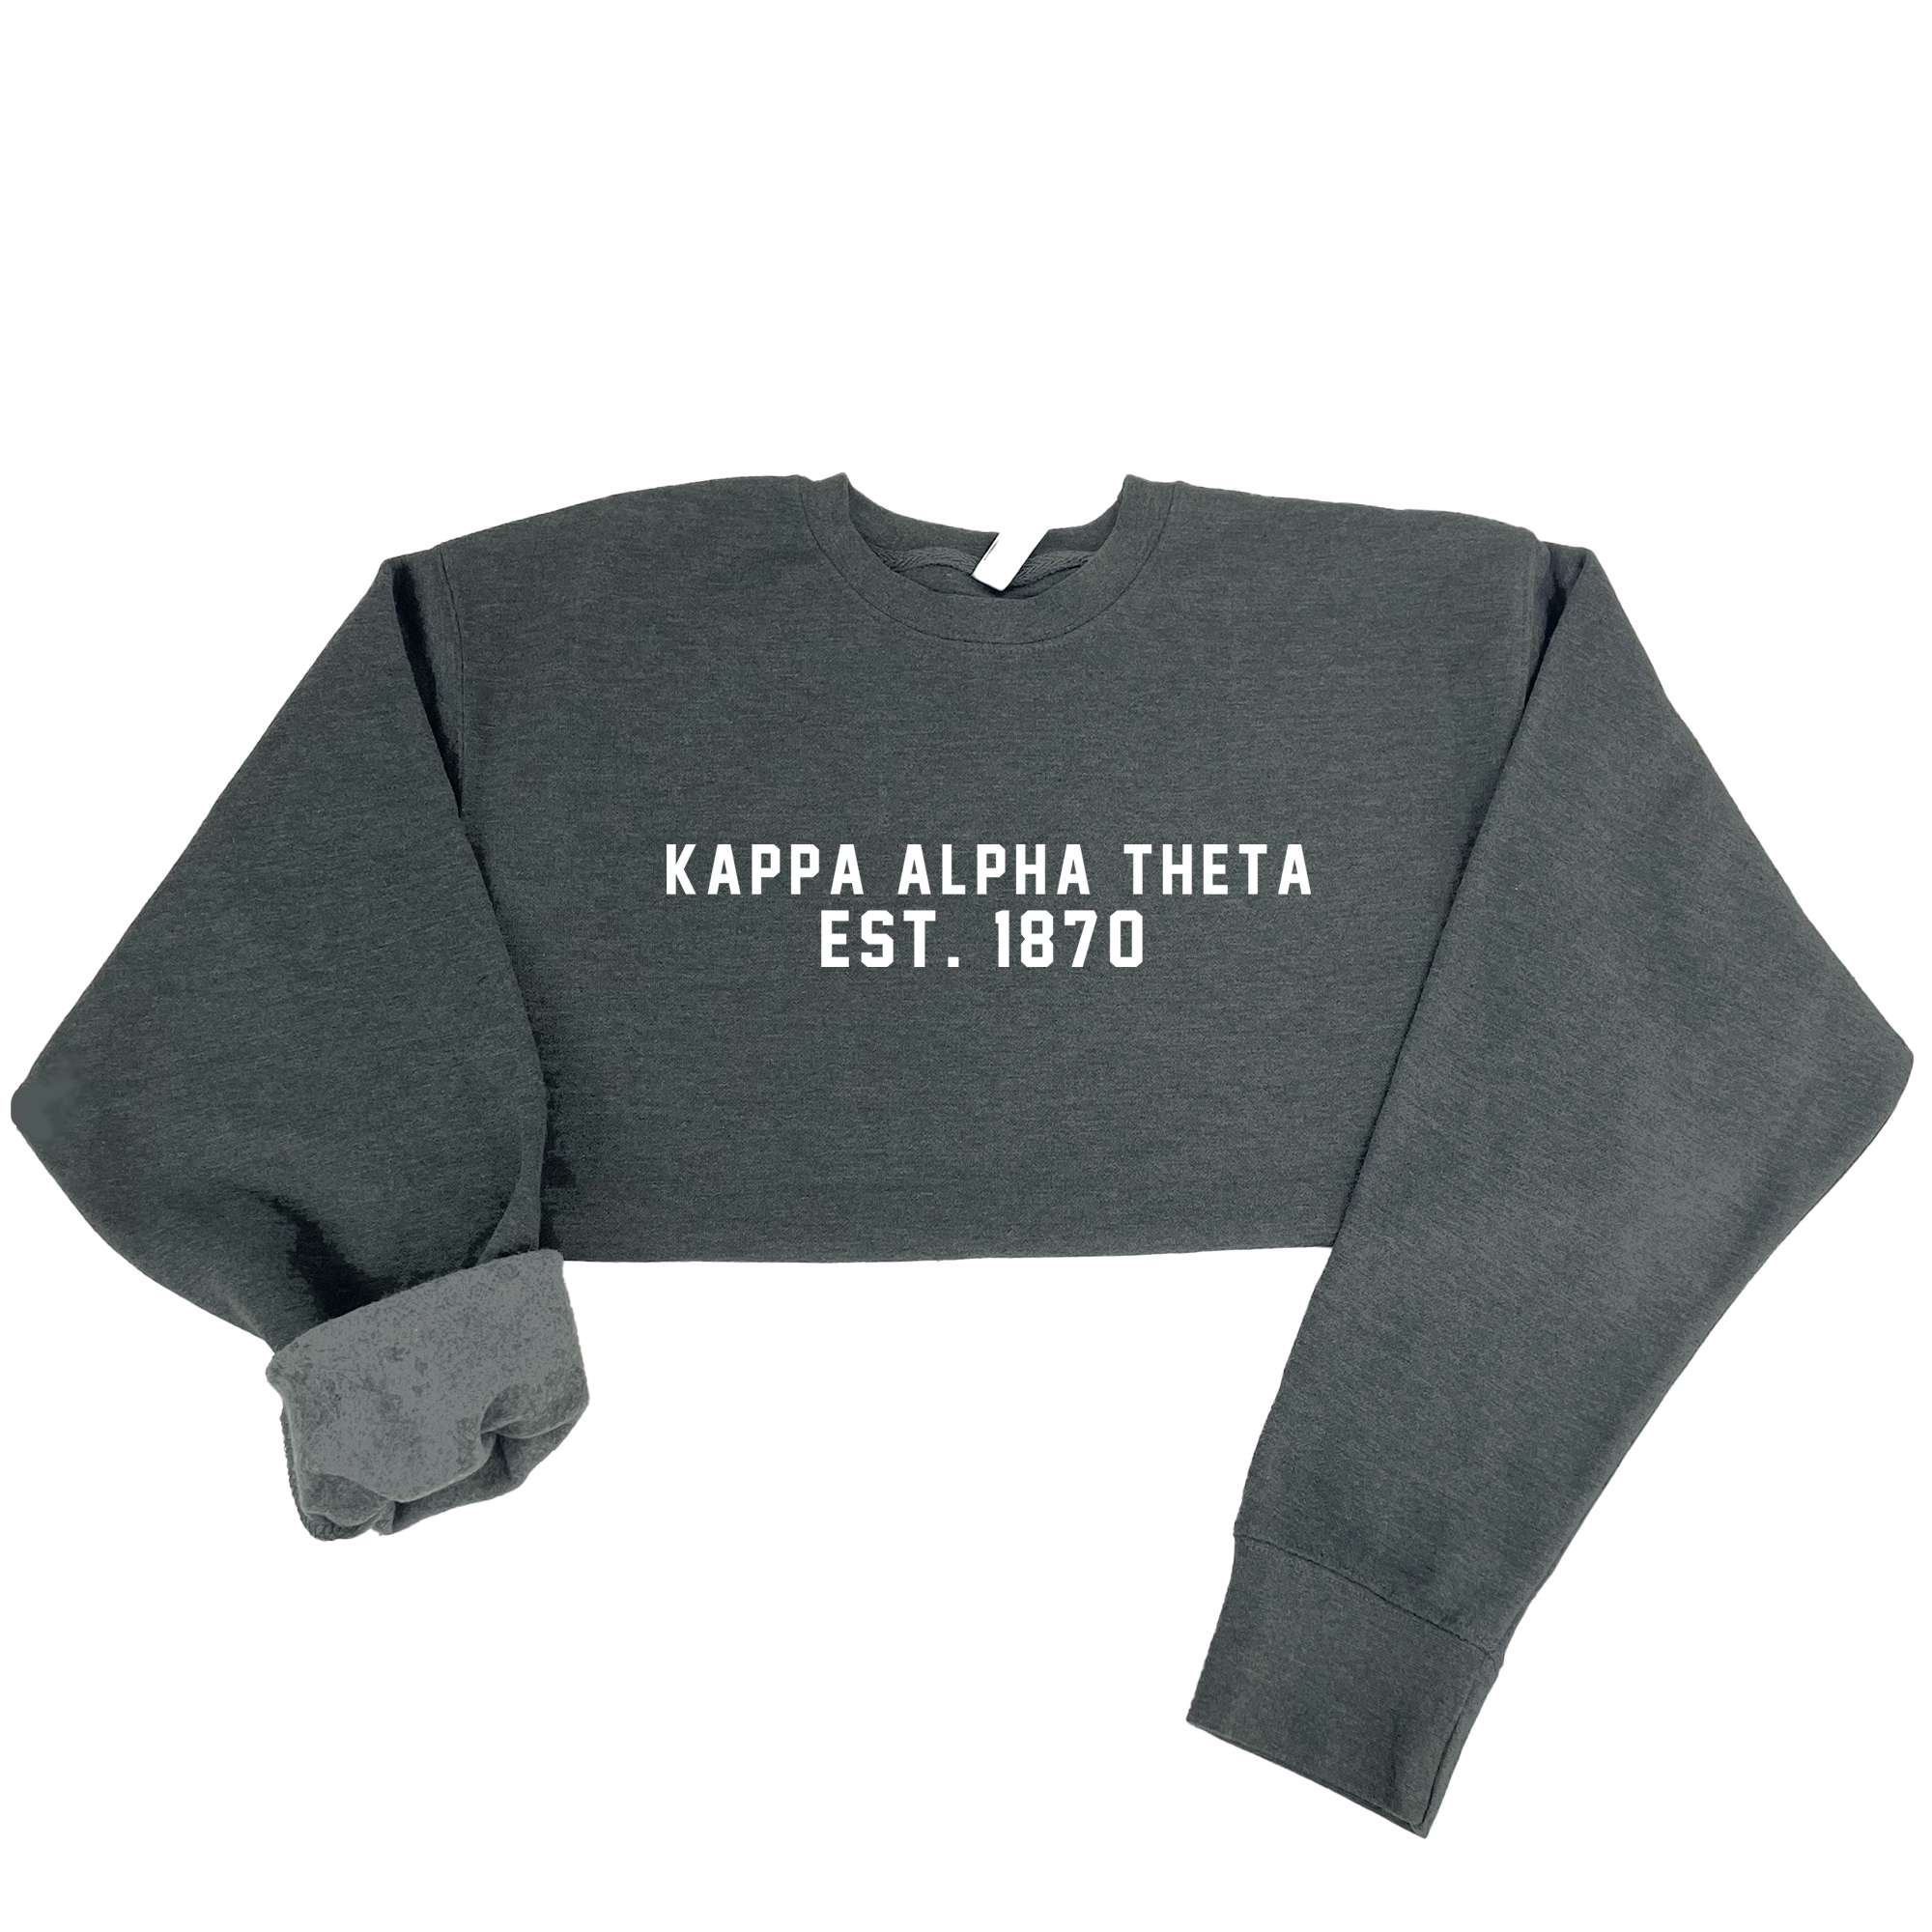 Kappa Alpha Theta Est. 1870 Sweatshirt